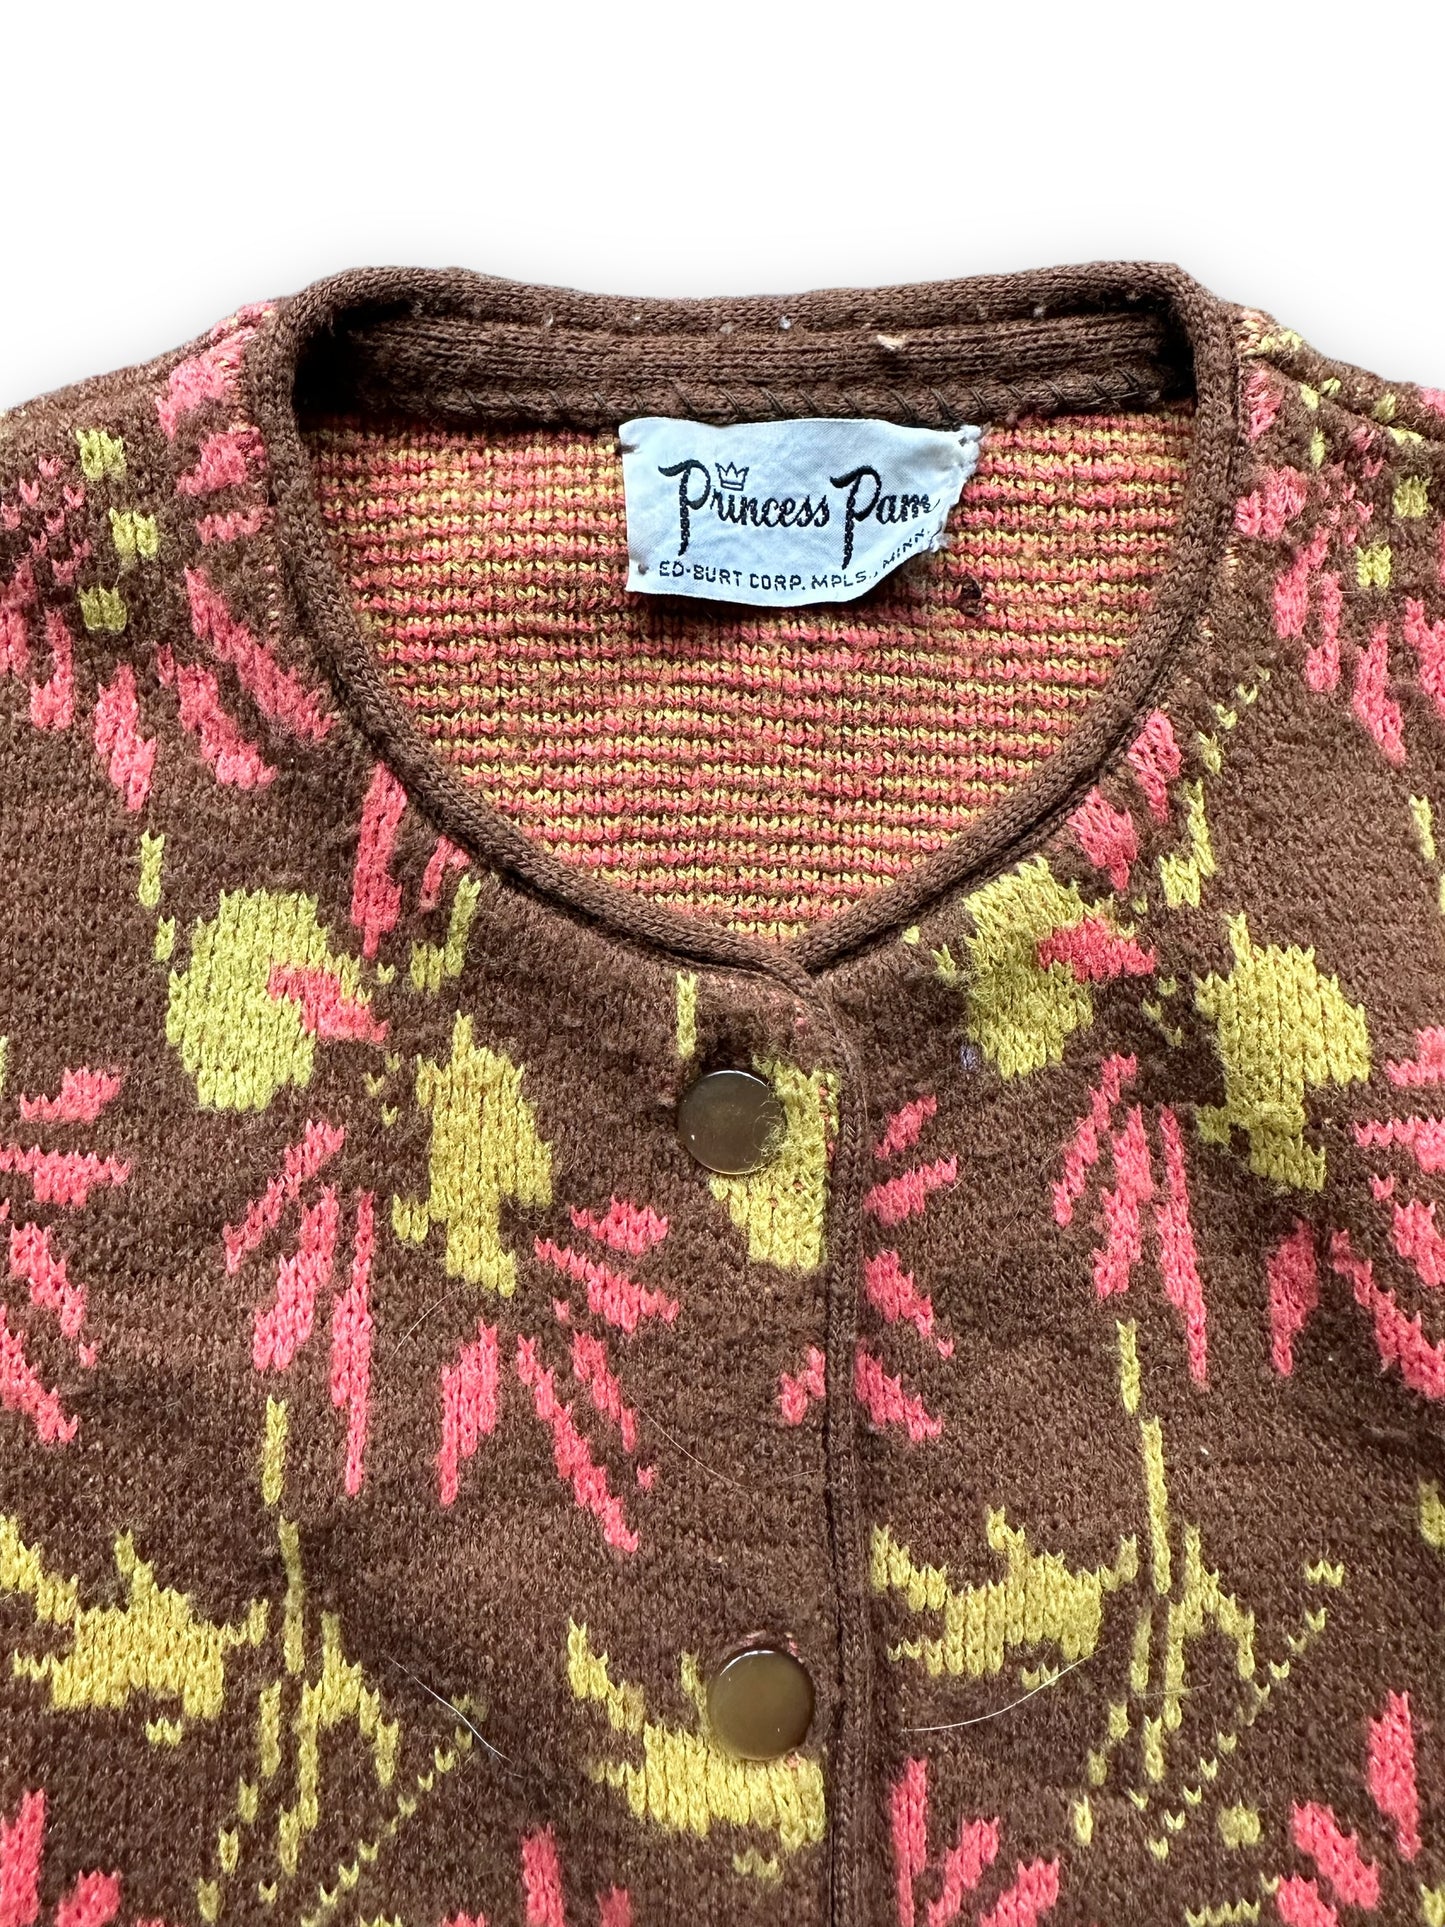 Tag View of Vintage Princess Pam Sweater SZ S |  Vintage Sweaters Seattle | Barn Owl Vintage Seattle